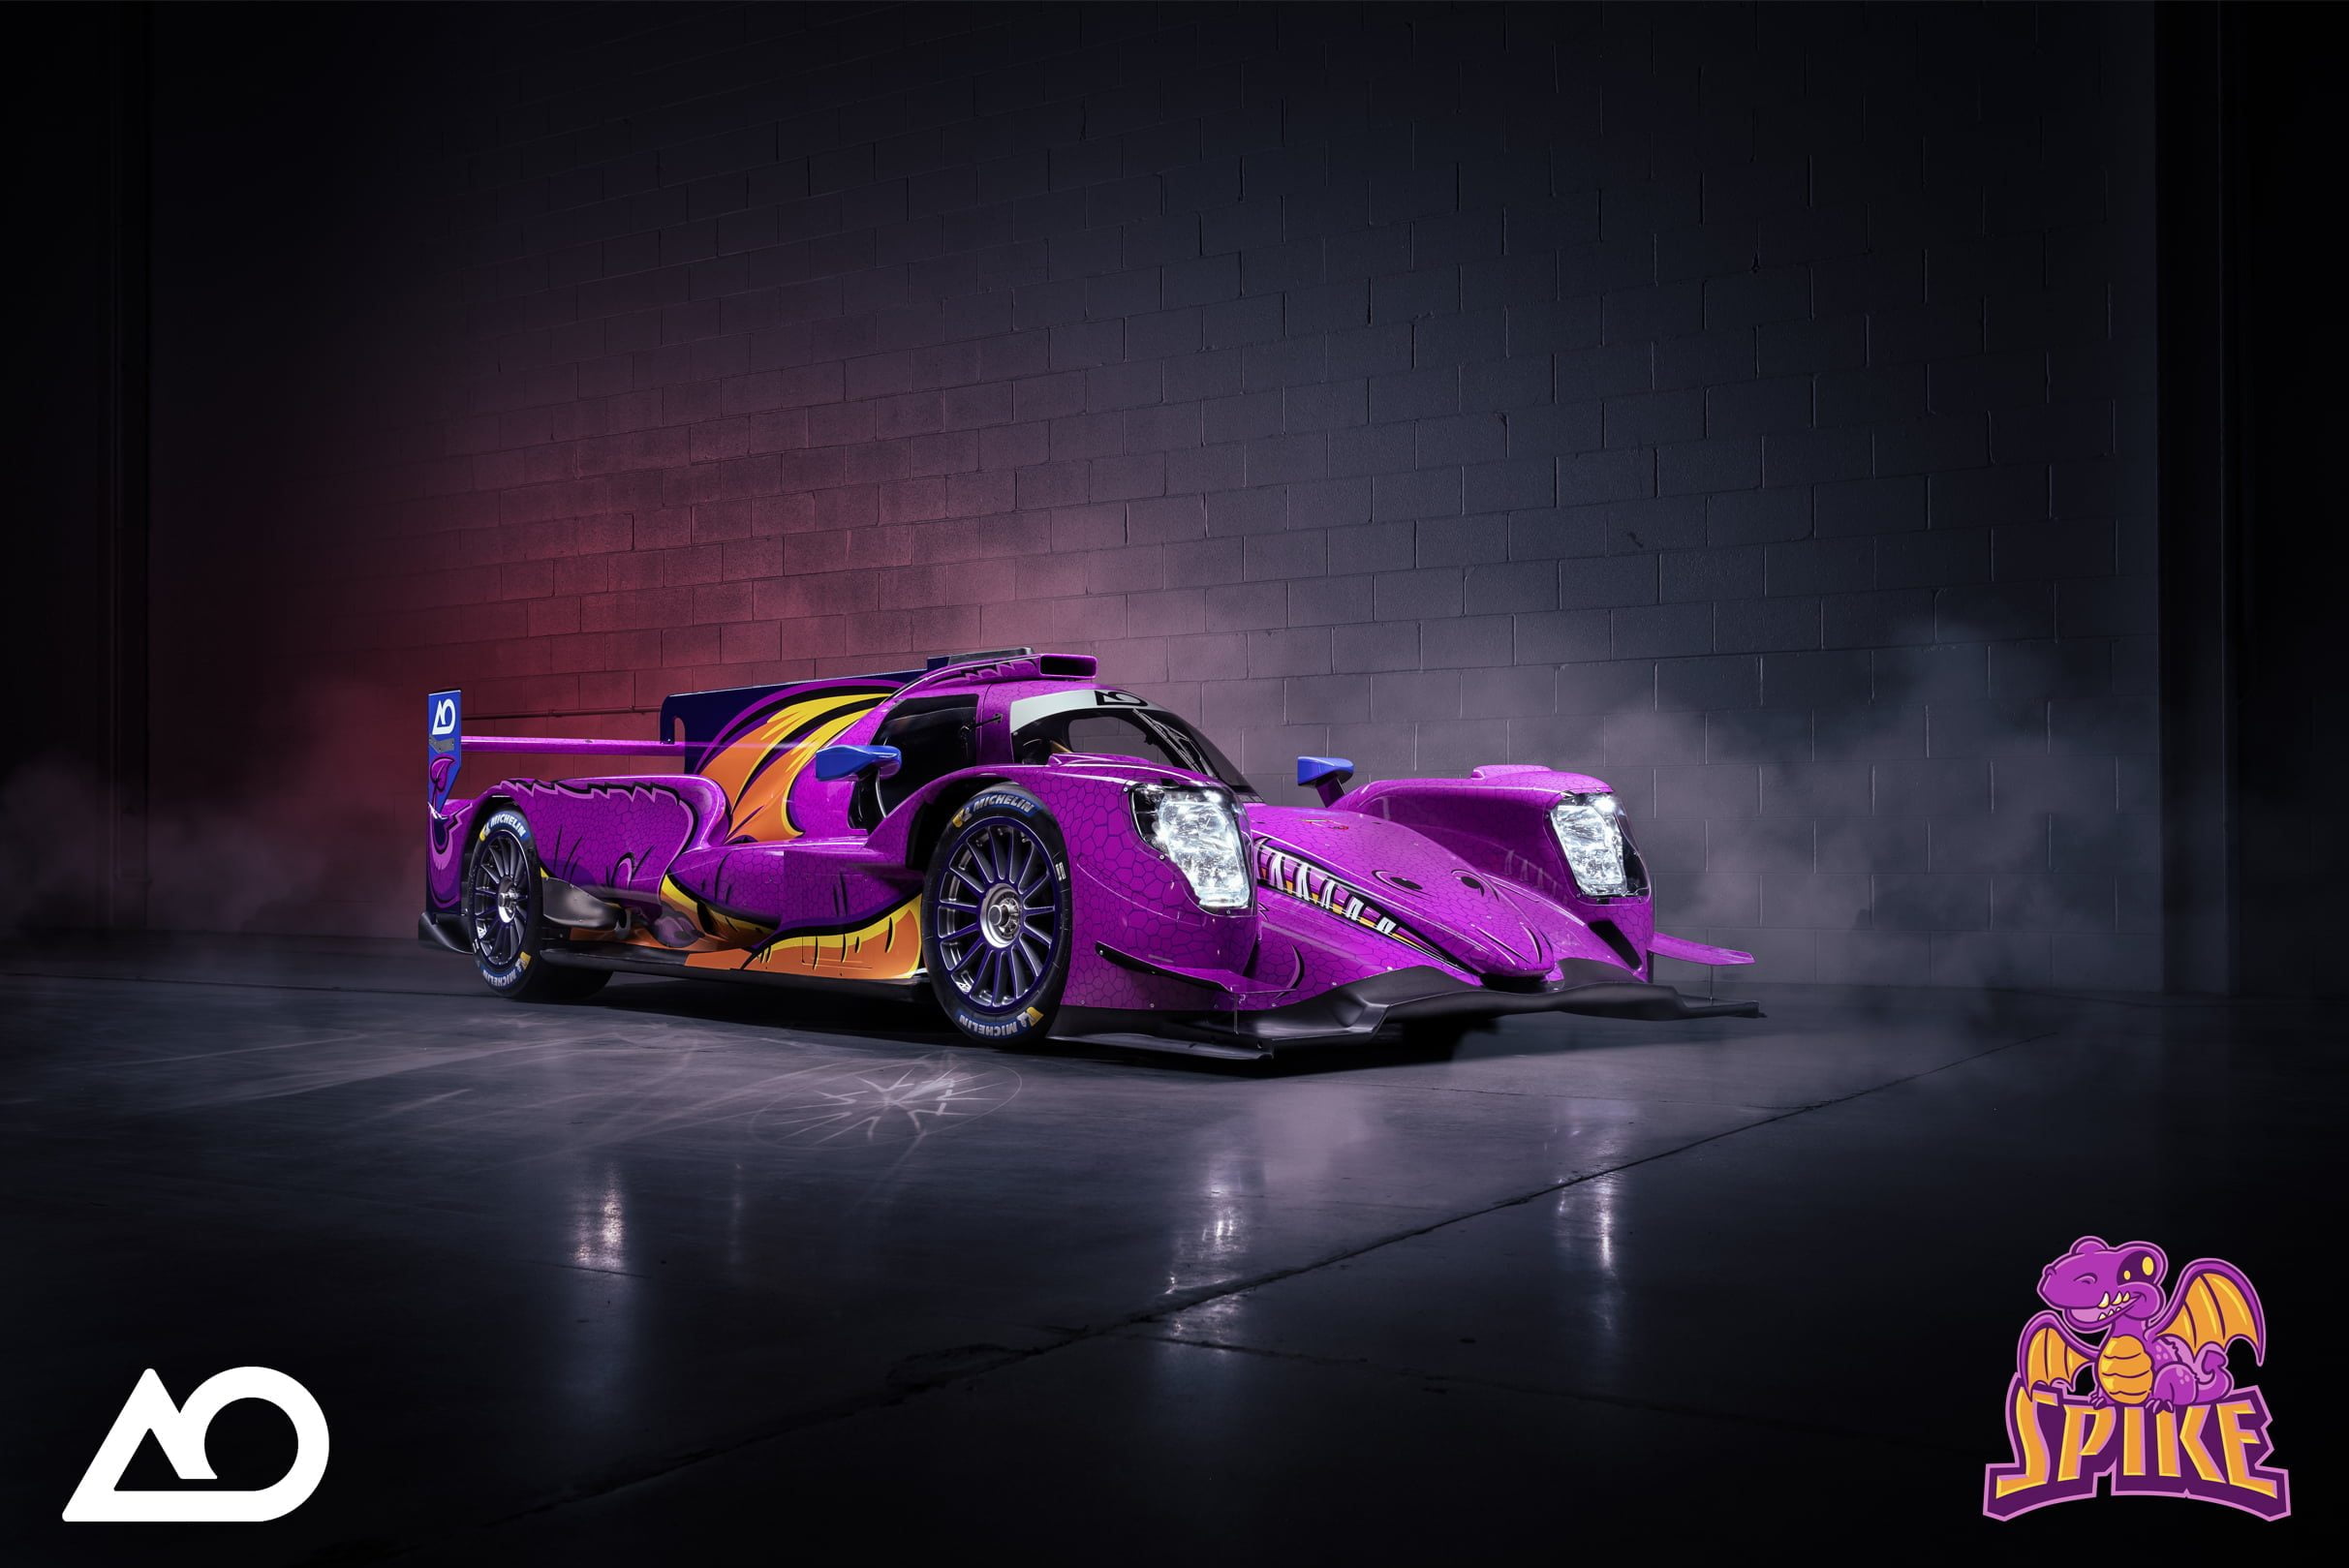 AO Racing Introduces Spike, the LMP2 Dragon